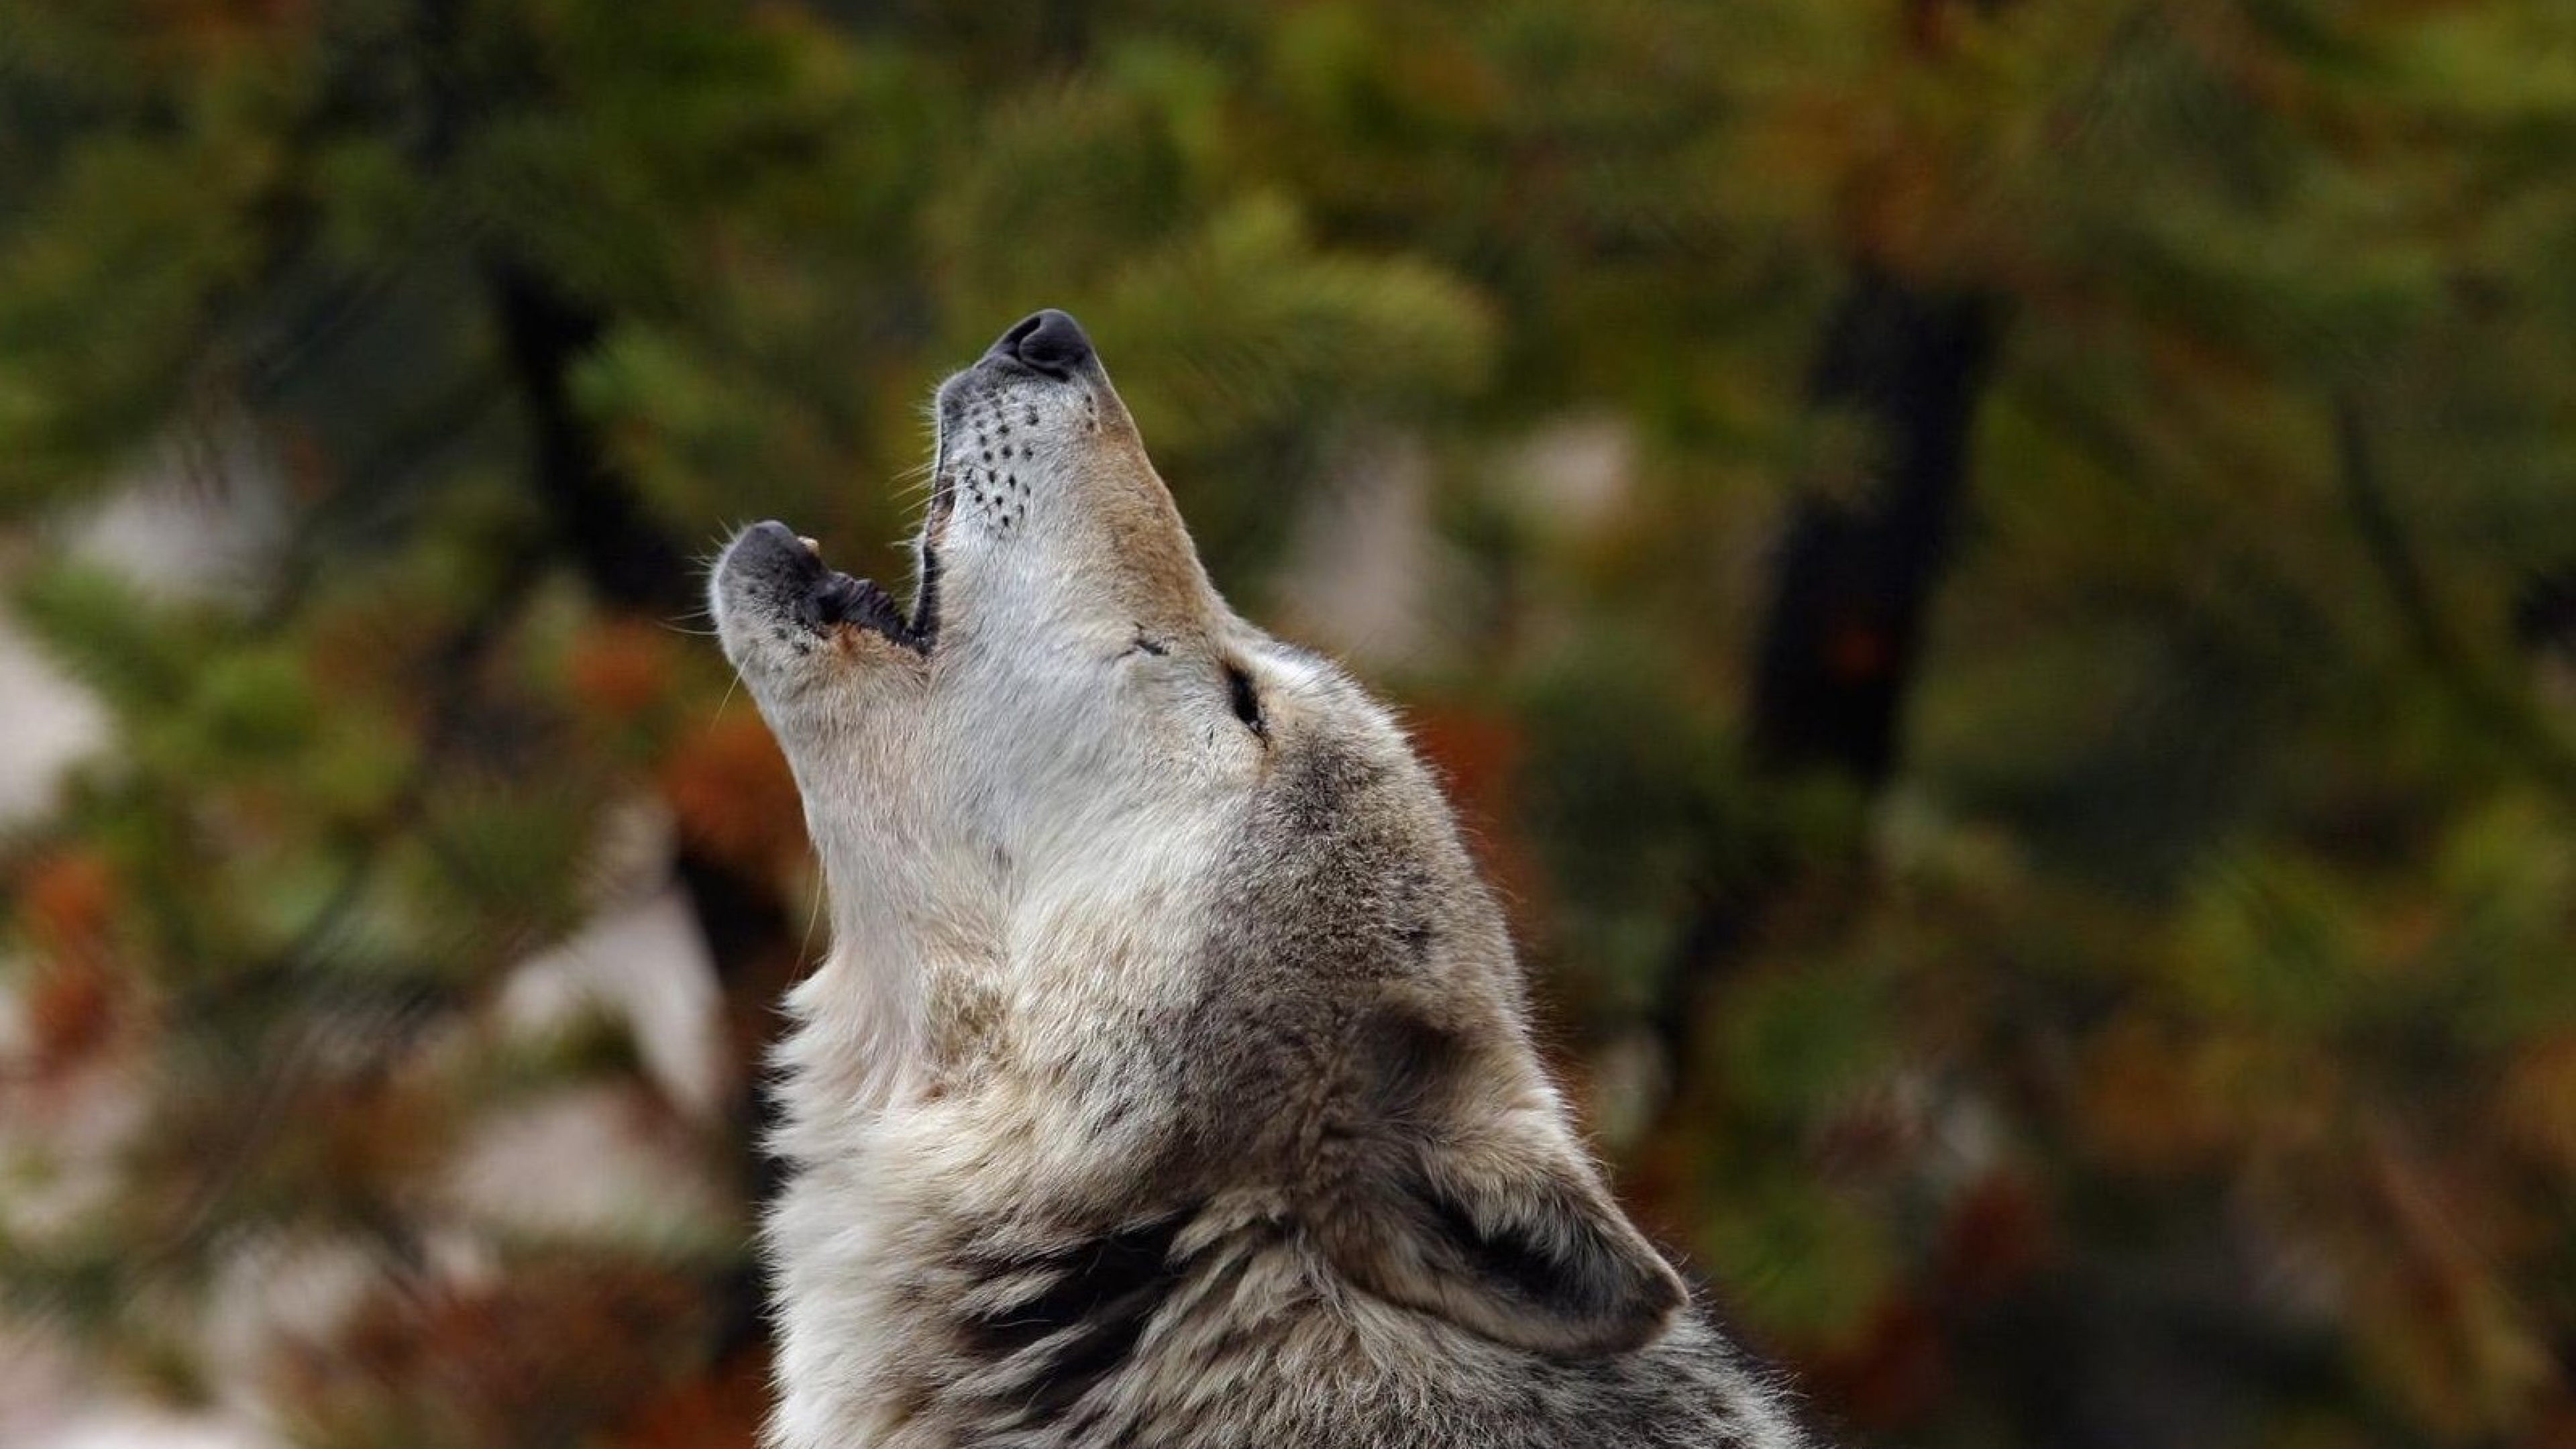 Wallpaper Howling Wolf Crying Dog 4k Ultra HD